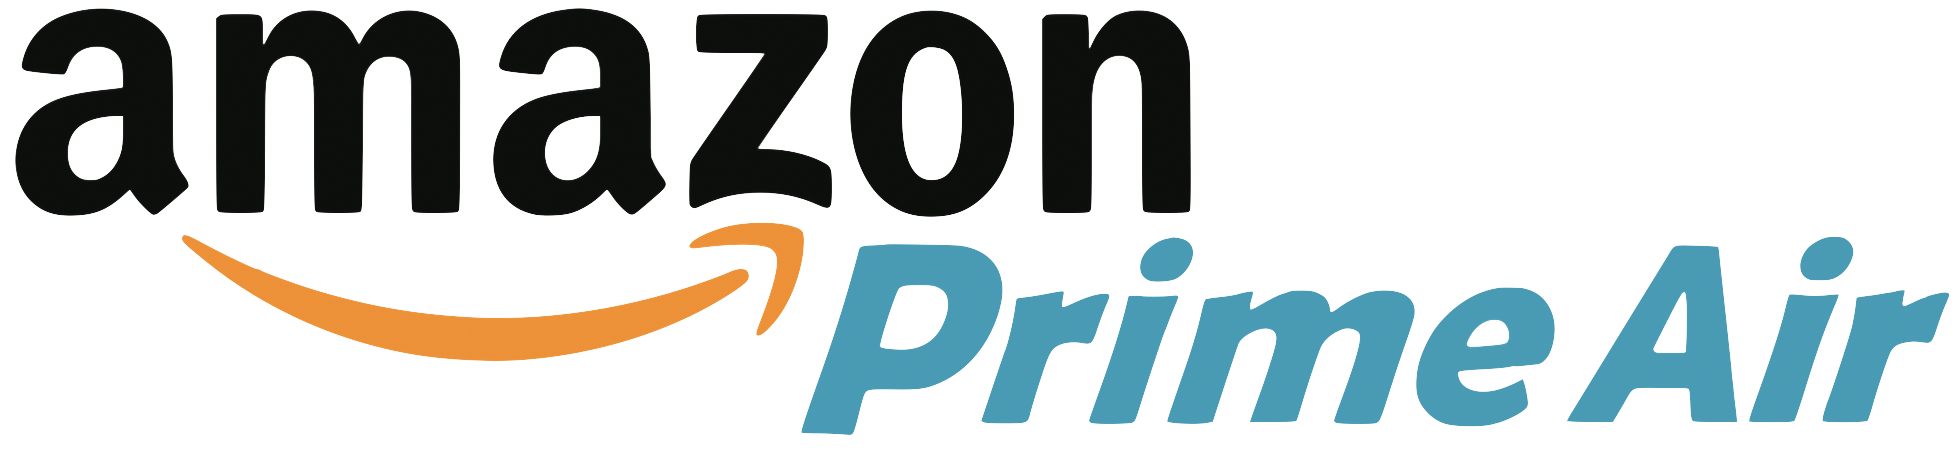 Amazon Prime Membresía PNG imagen Transparente